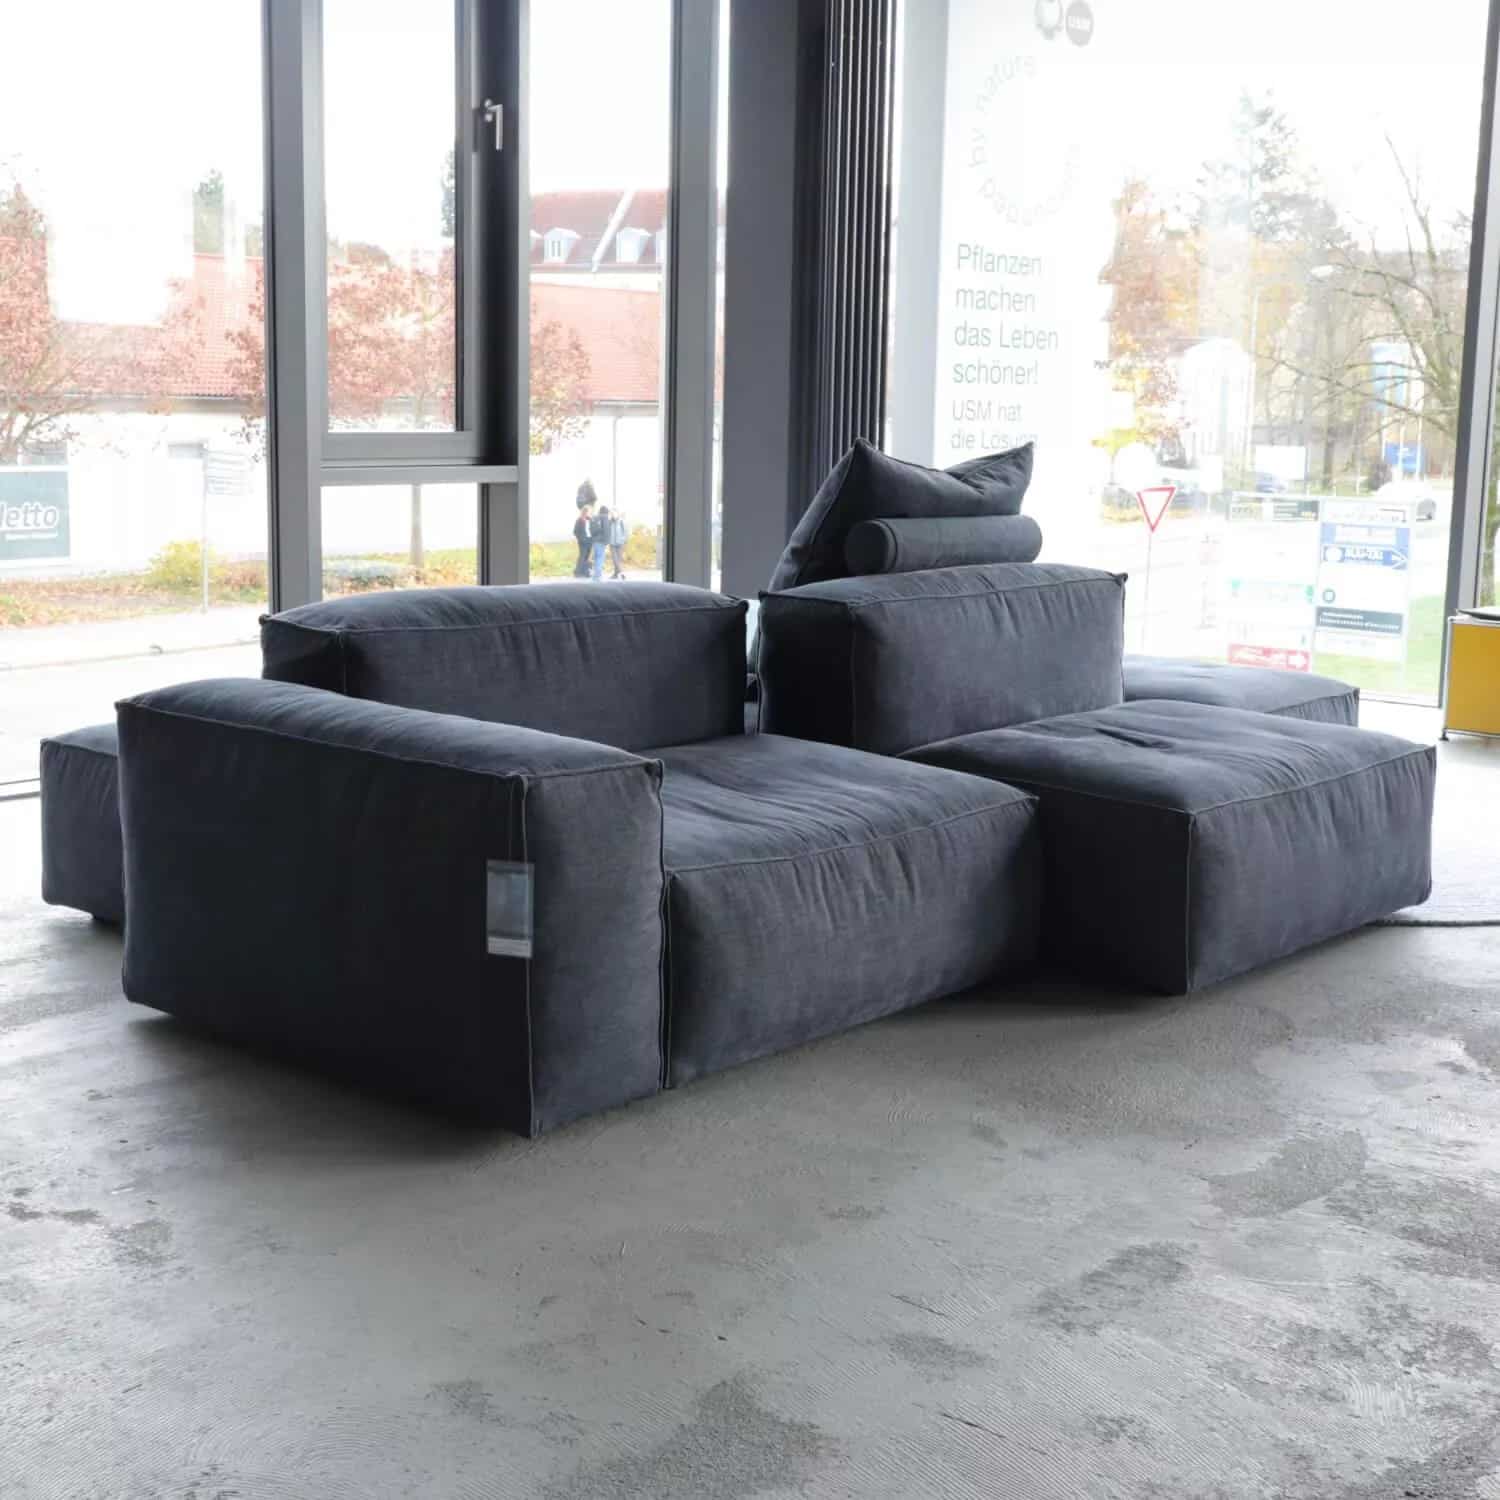 Sofa FOLD von Eigenmarke Janina Gruber